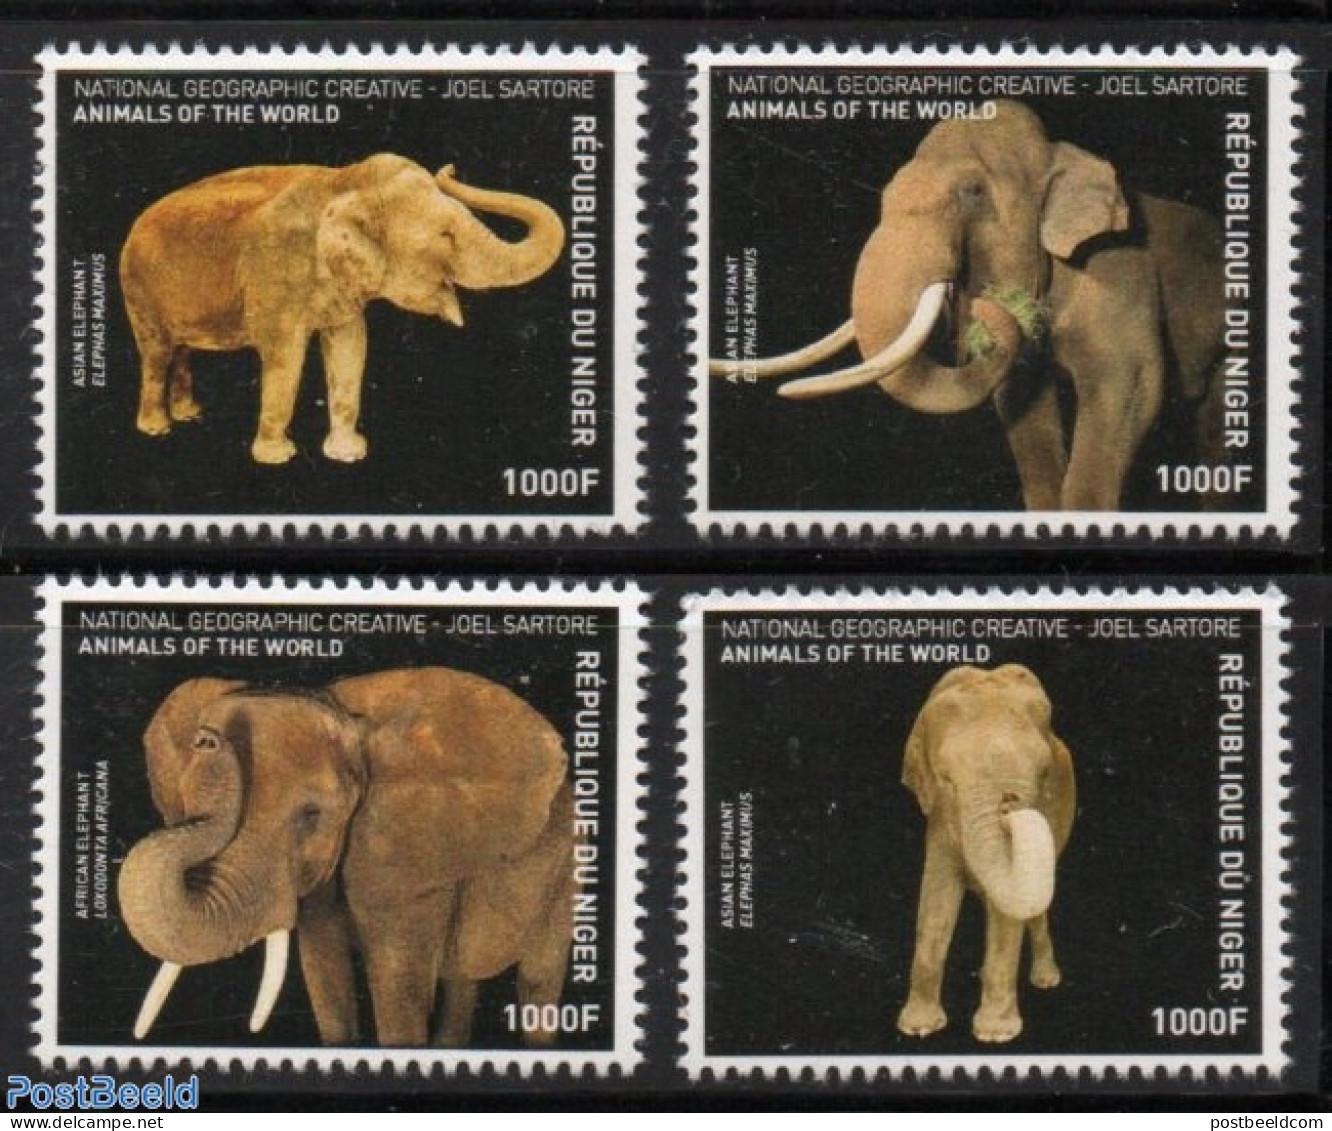 Niger 2016 Elephants 4v, Mint NH, Nature - Elephants - Niger (1960-...)